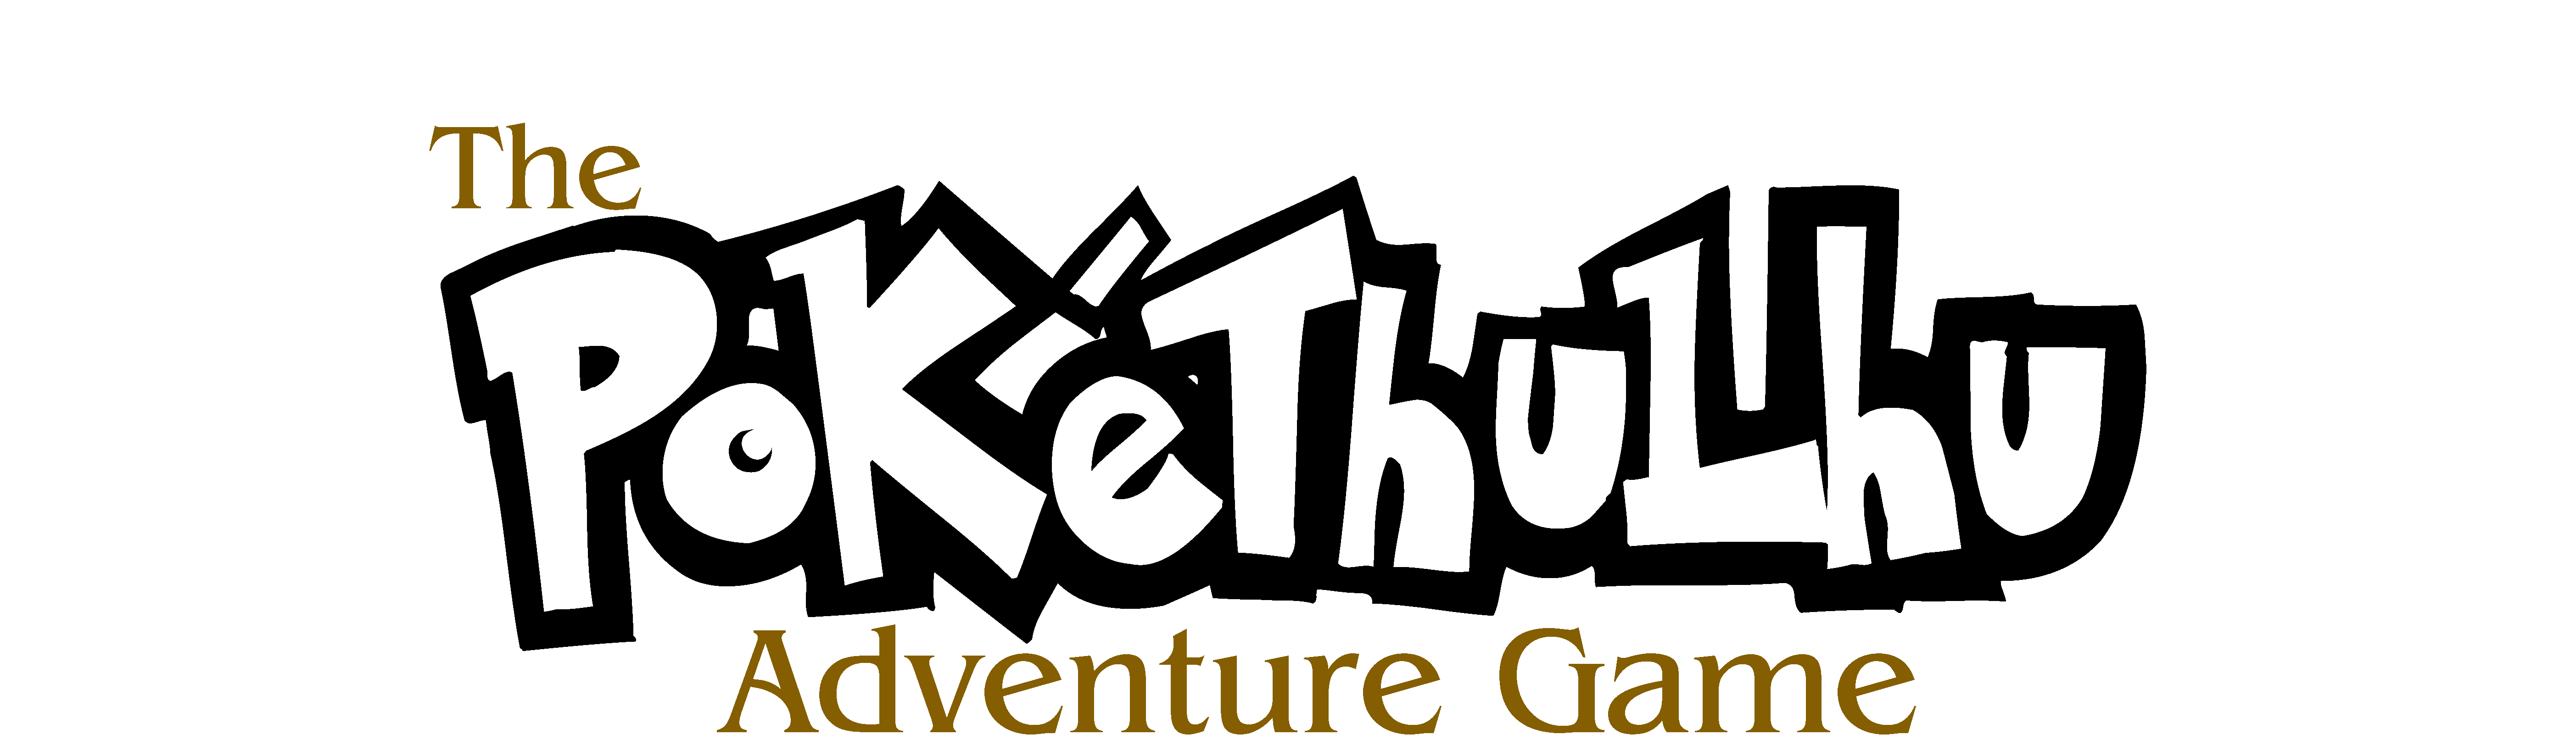 Pokéthulhu Adventure Game